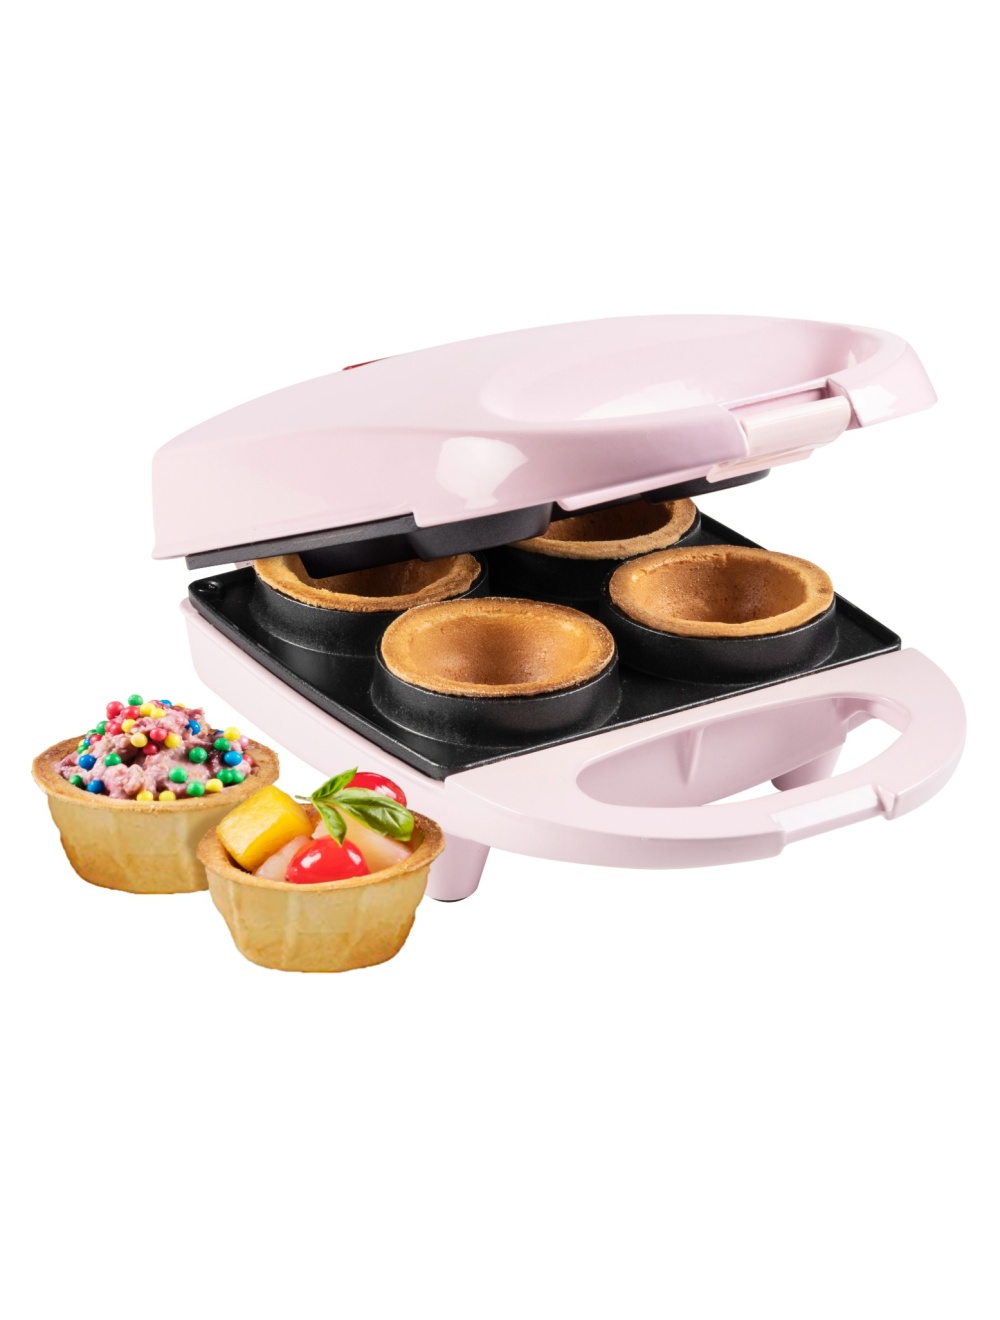 AWCM4P Mini waffle cup maker